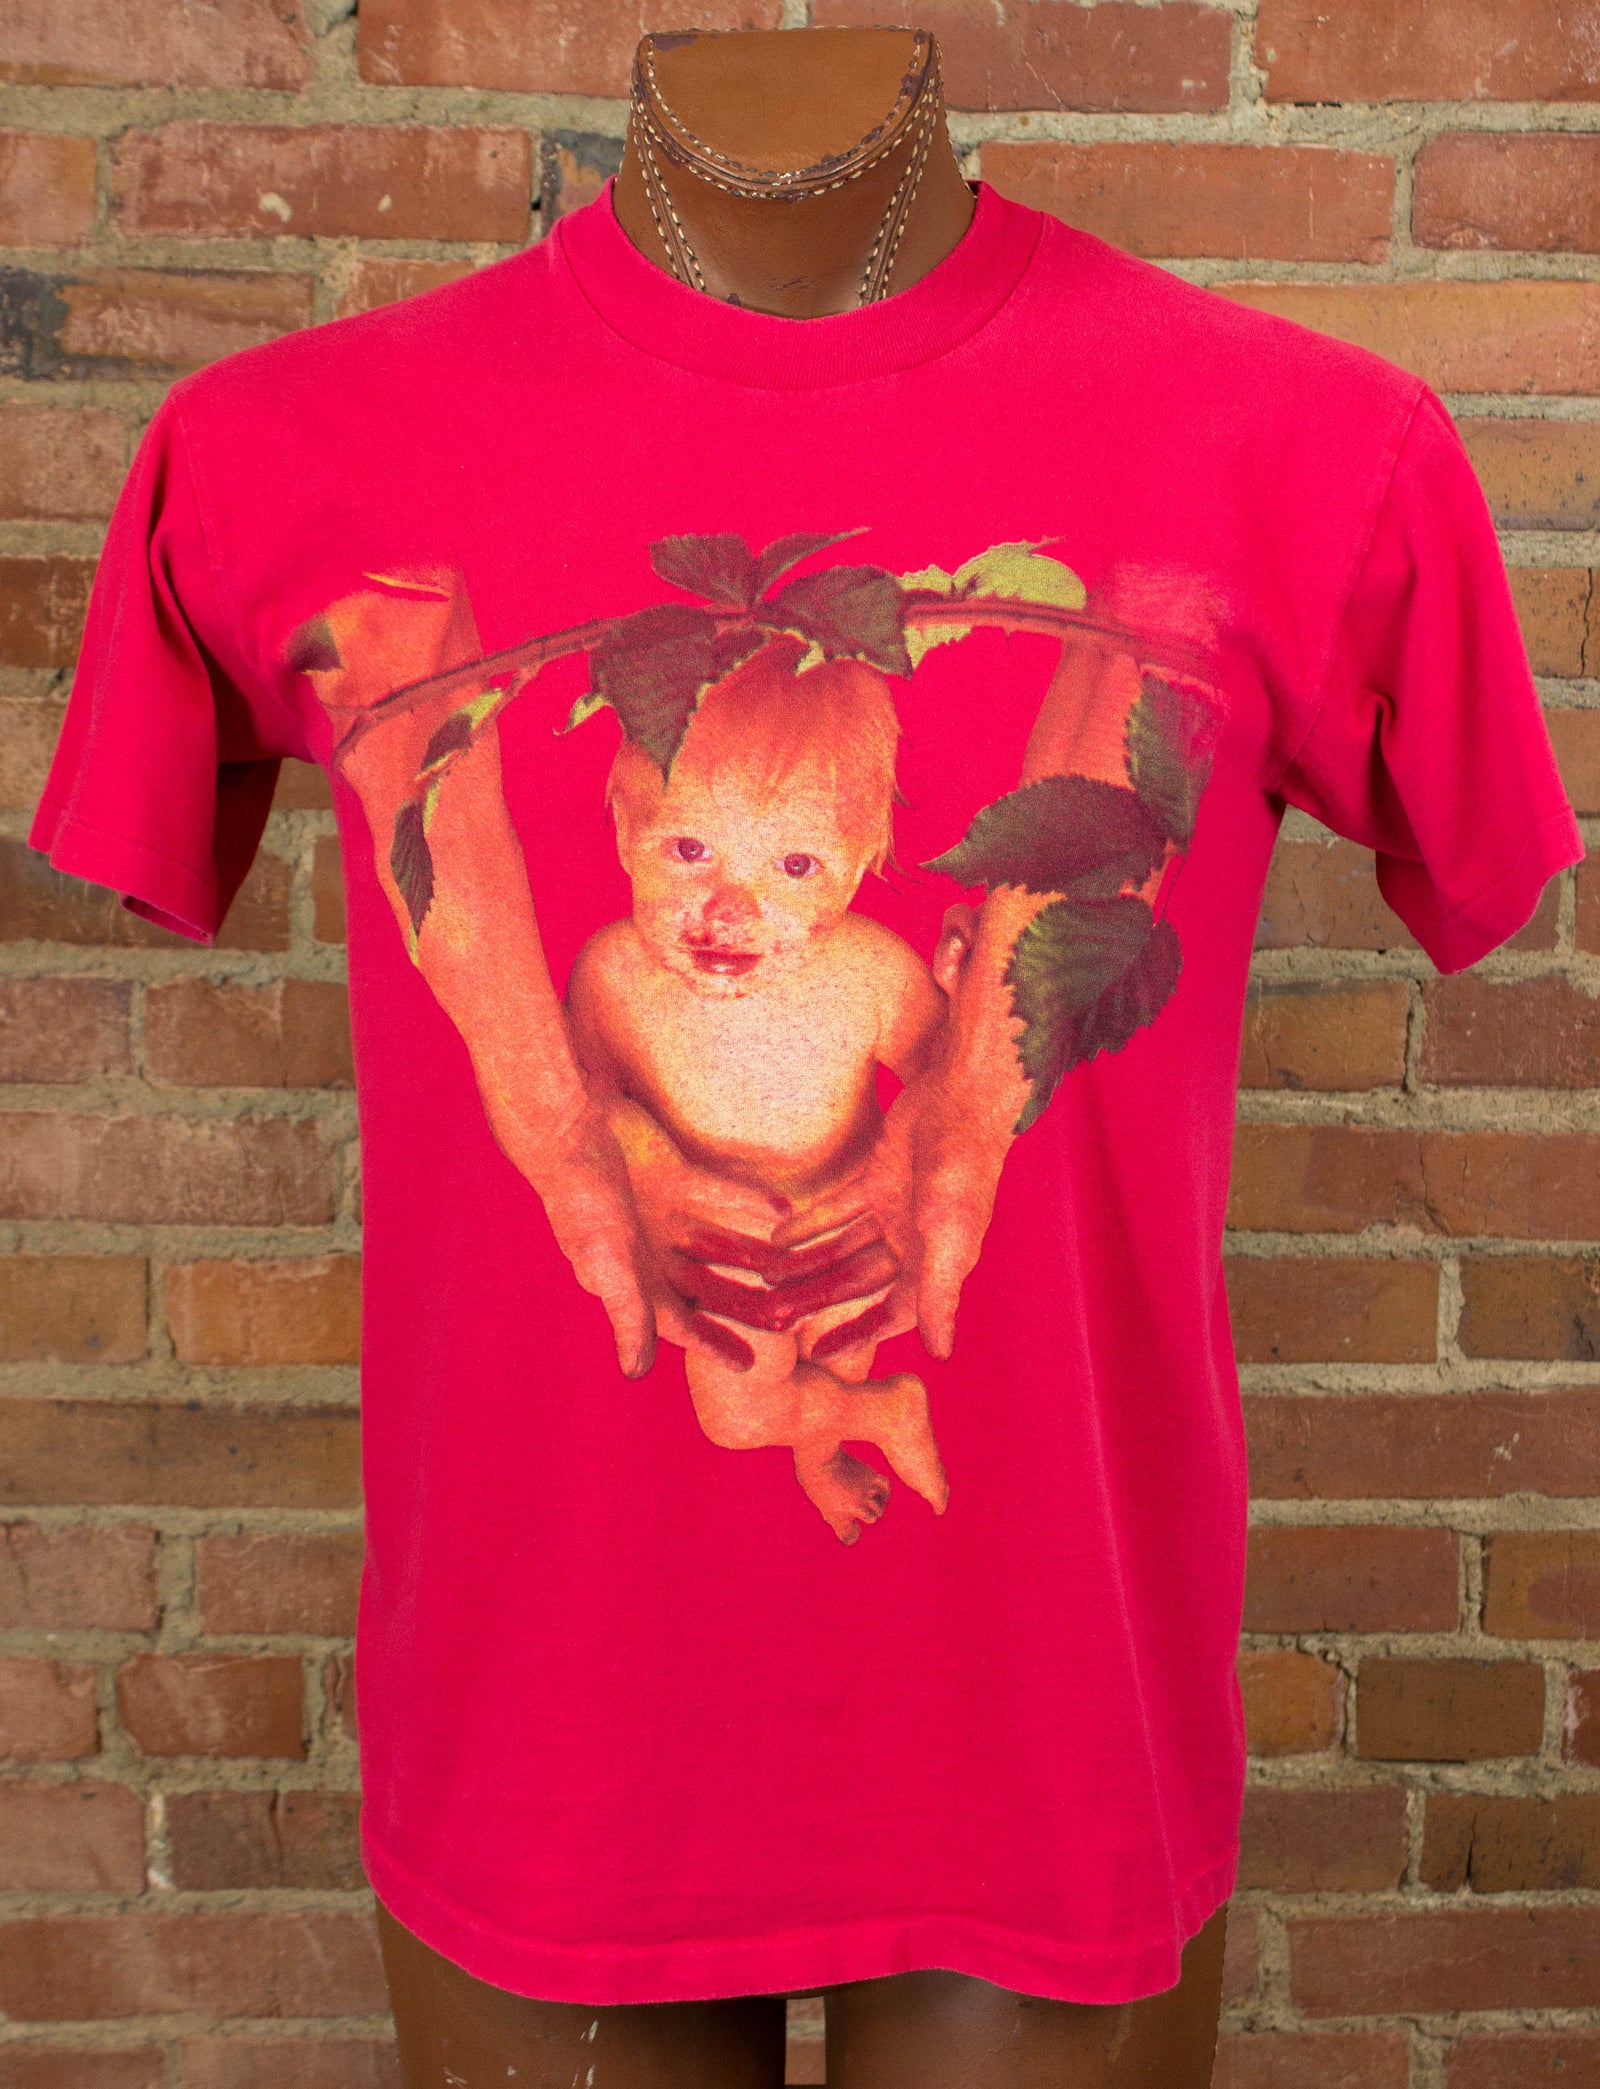 Vintage Goo Goo Dolls Concert T Shirt 1995 A Boy Named Goo Tour Red Large